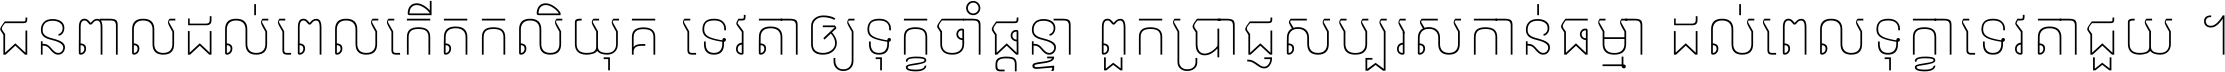 Noto Sans Khmer UI SemiCondensed Thin